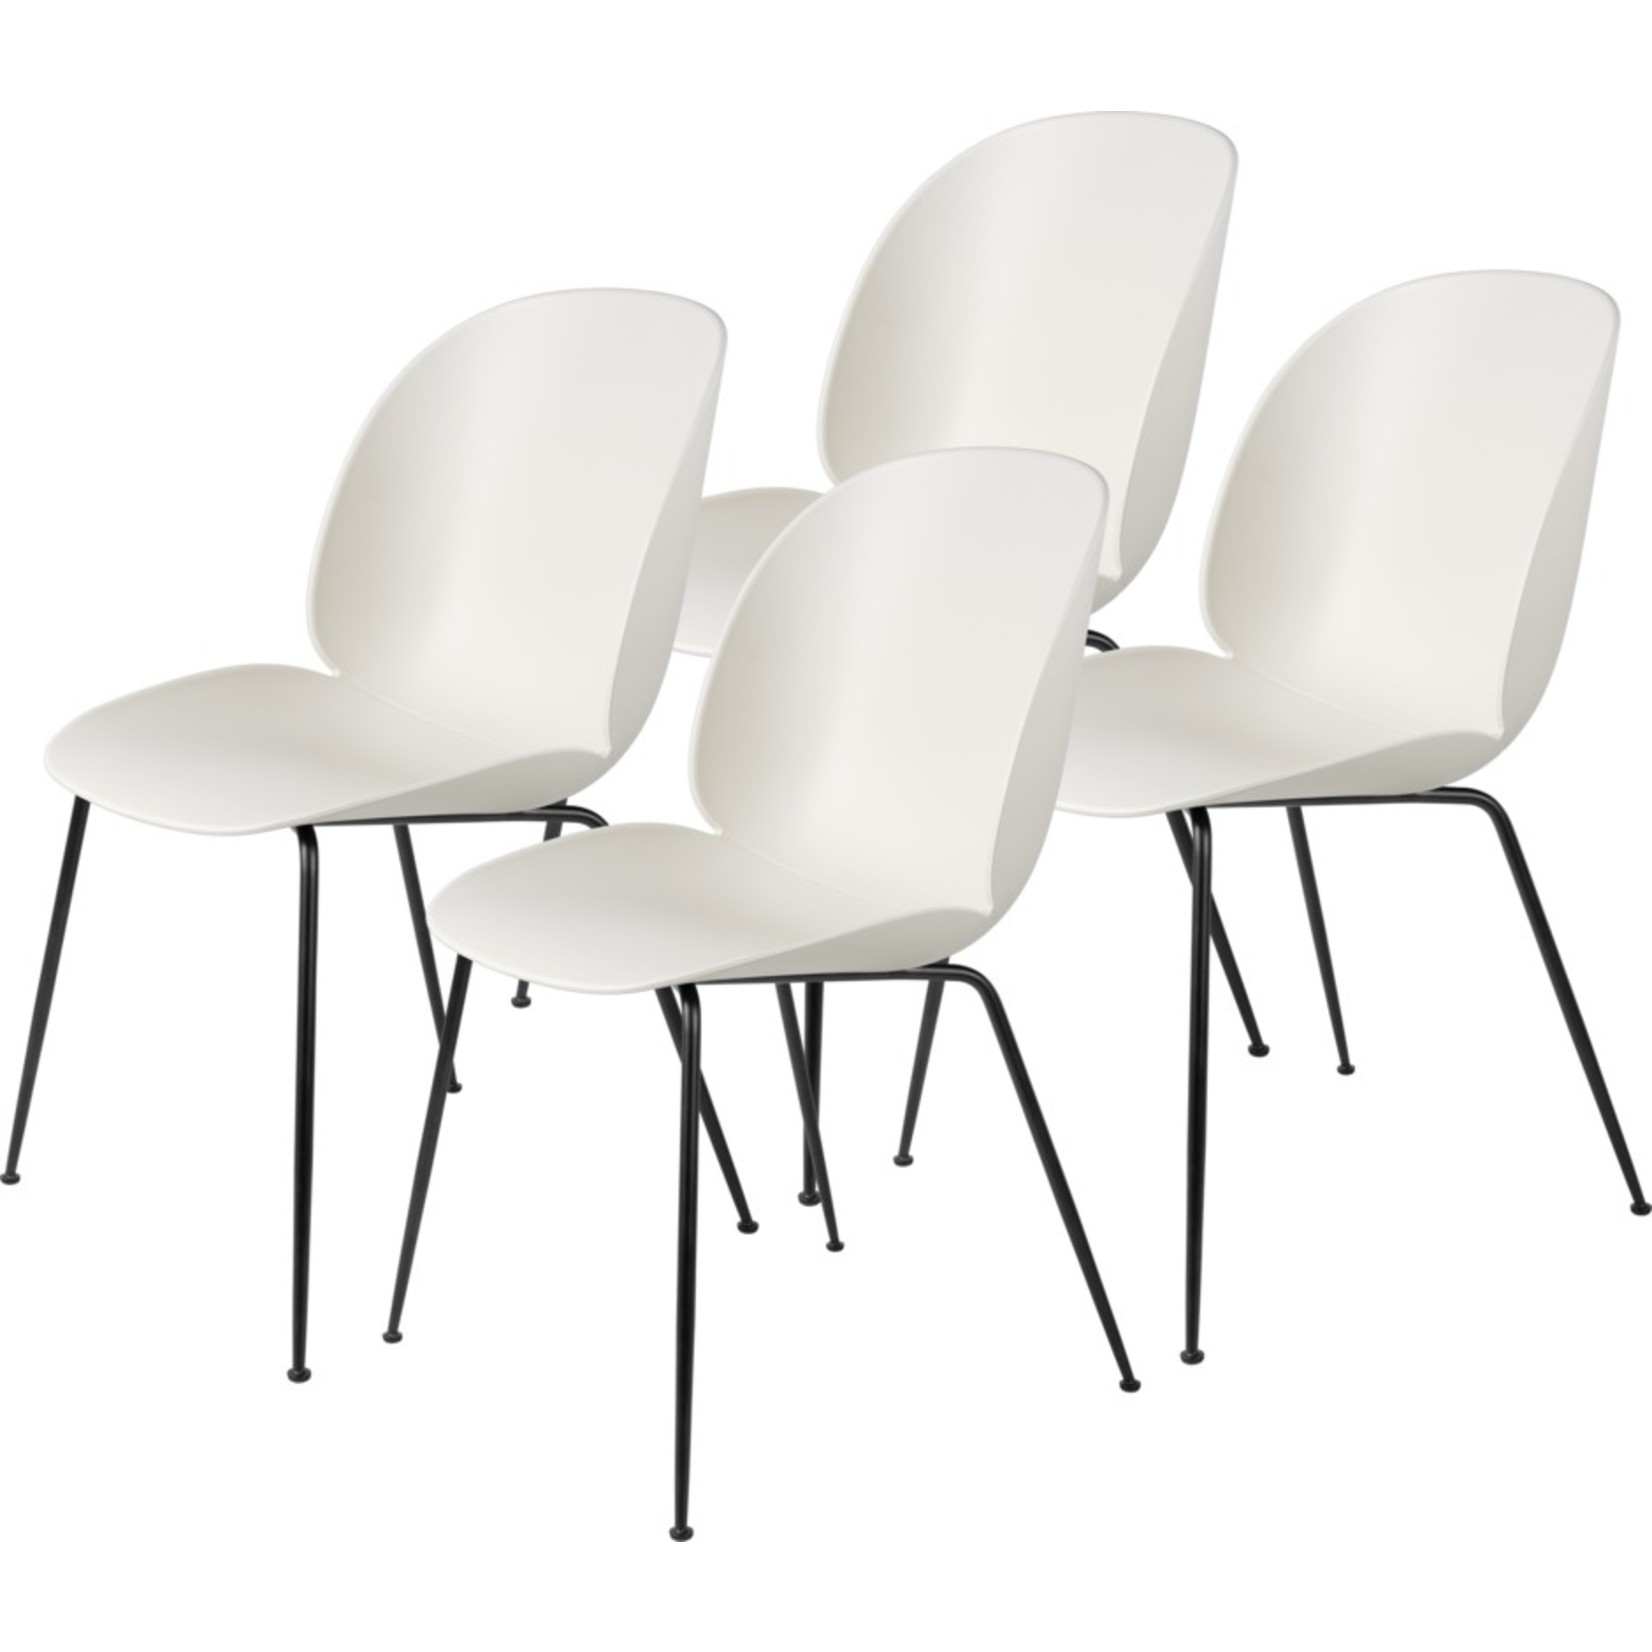 Gubi Beetle Dining Chair | Un-Upholstered Alabaster White & Black Matt Base, Set of 4